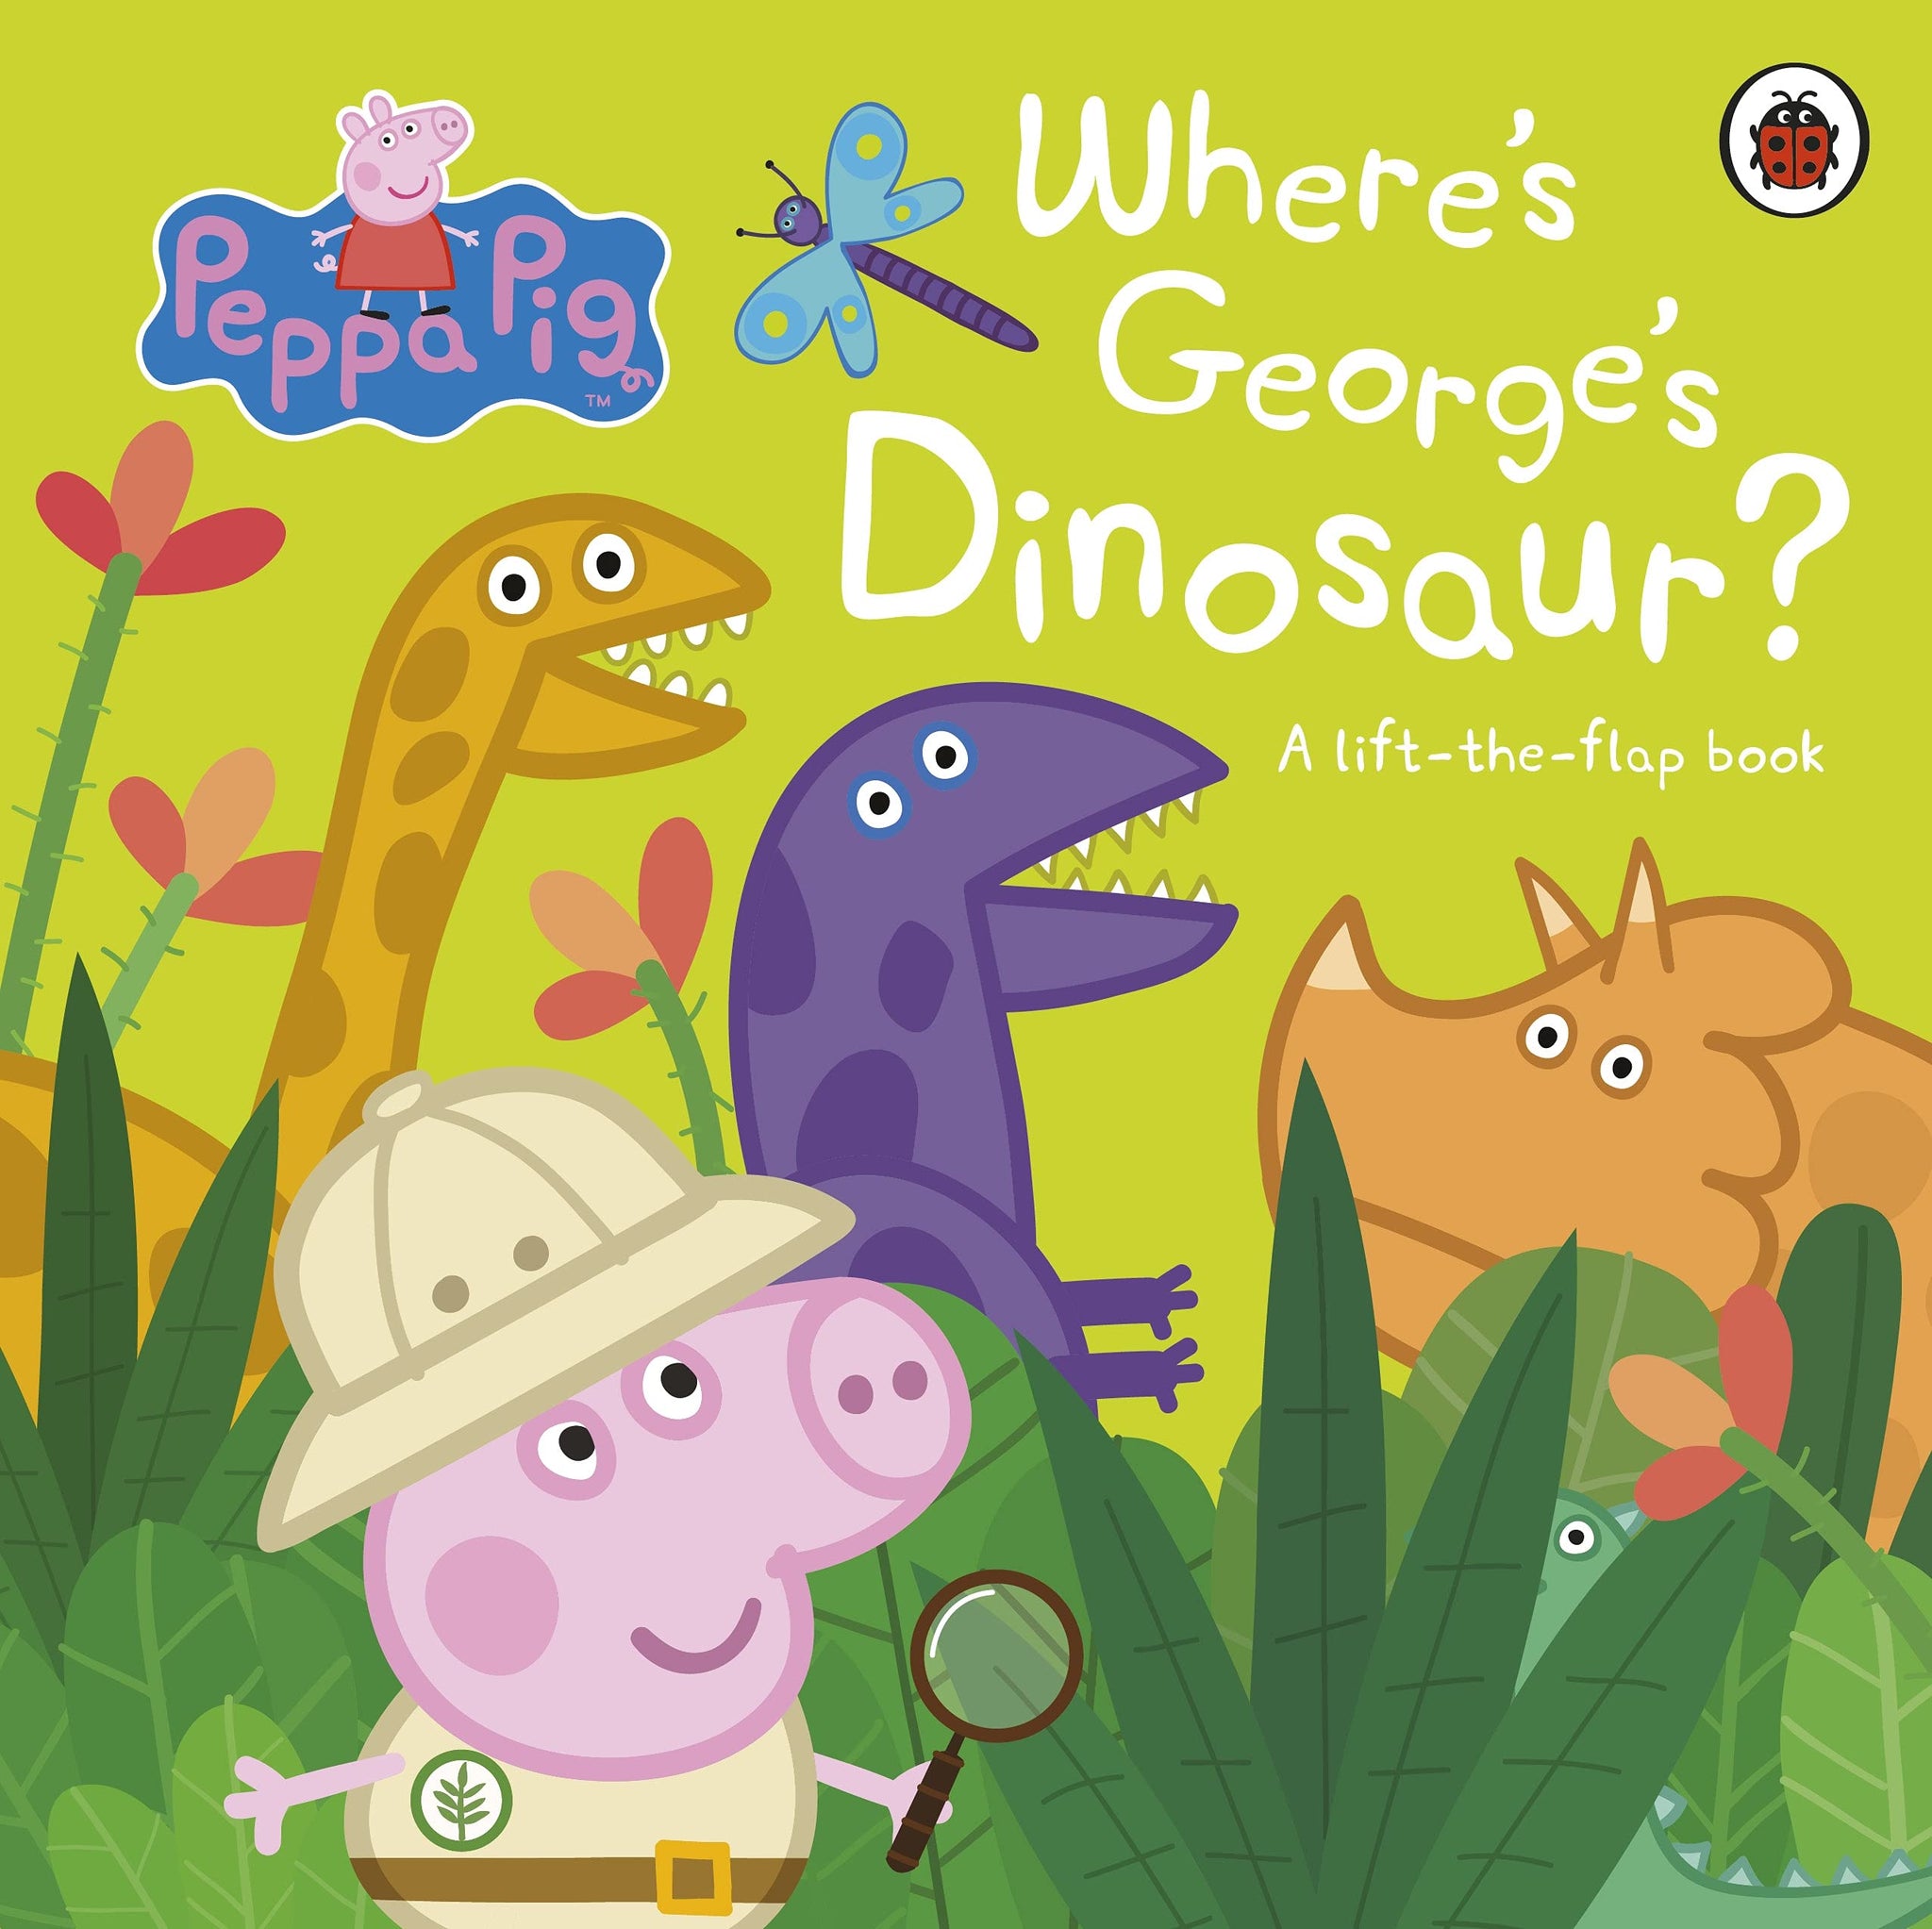 Peppa Pig: Where's George's Dinosaur?: A Lift The Flap - Board Book